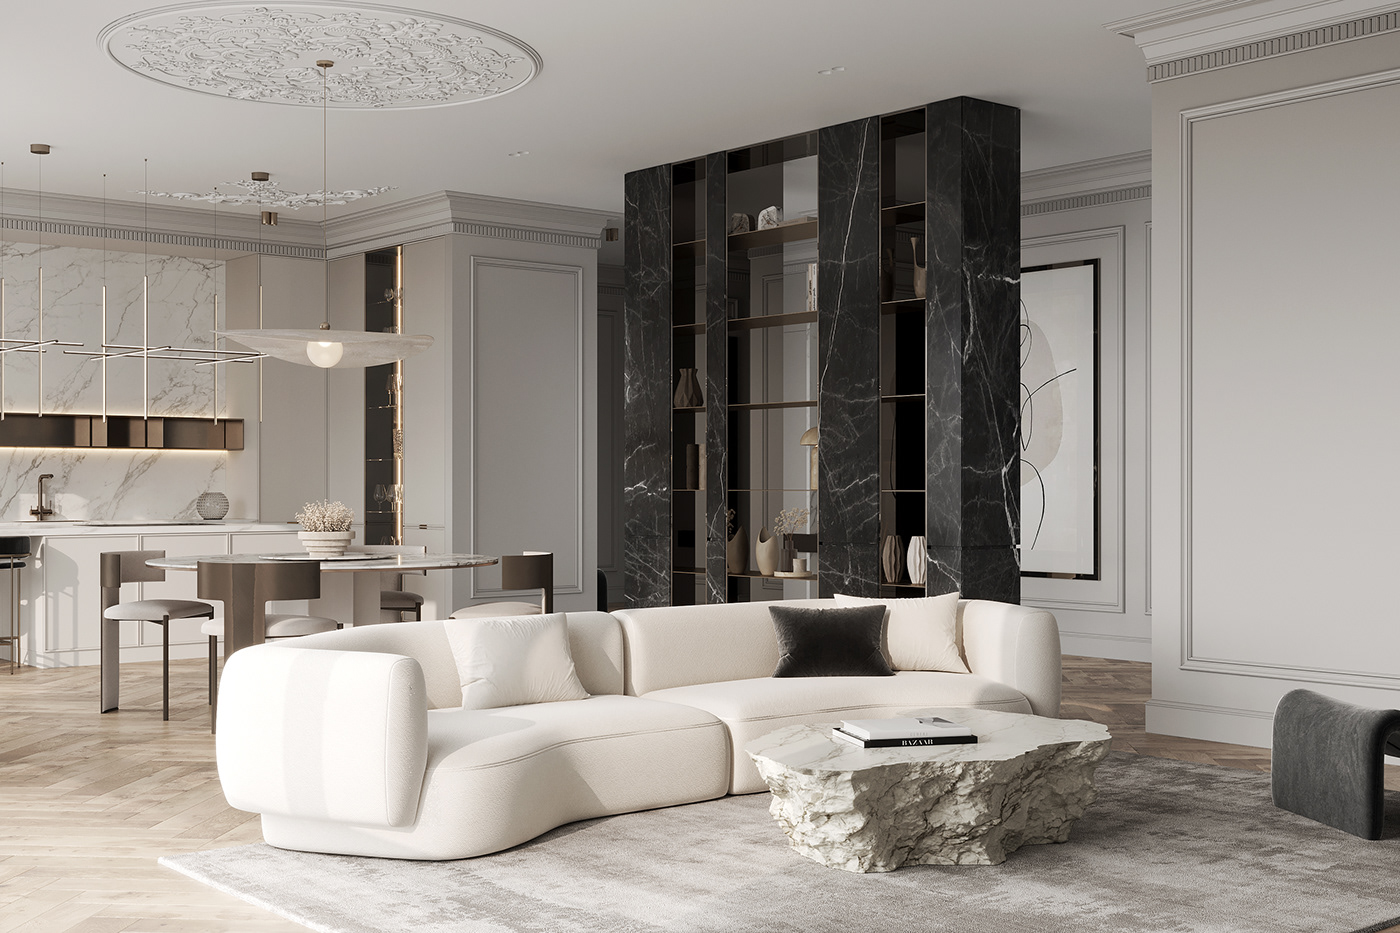 3D 3ds max architecture corona interior design  kitchen design living room modern Render visualization